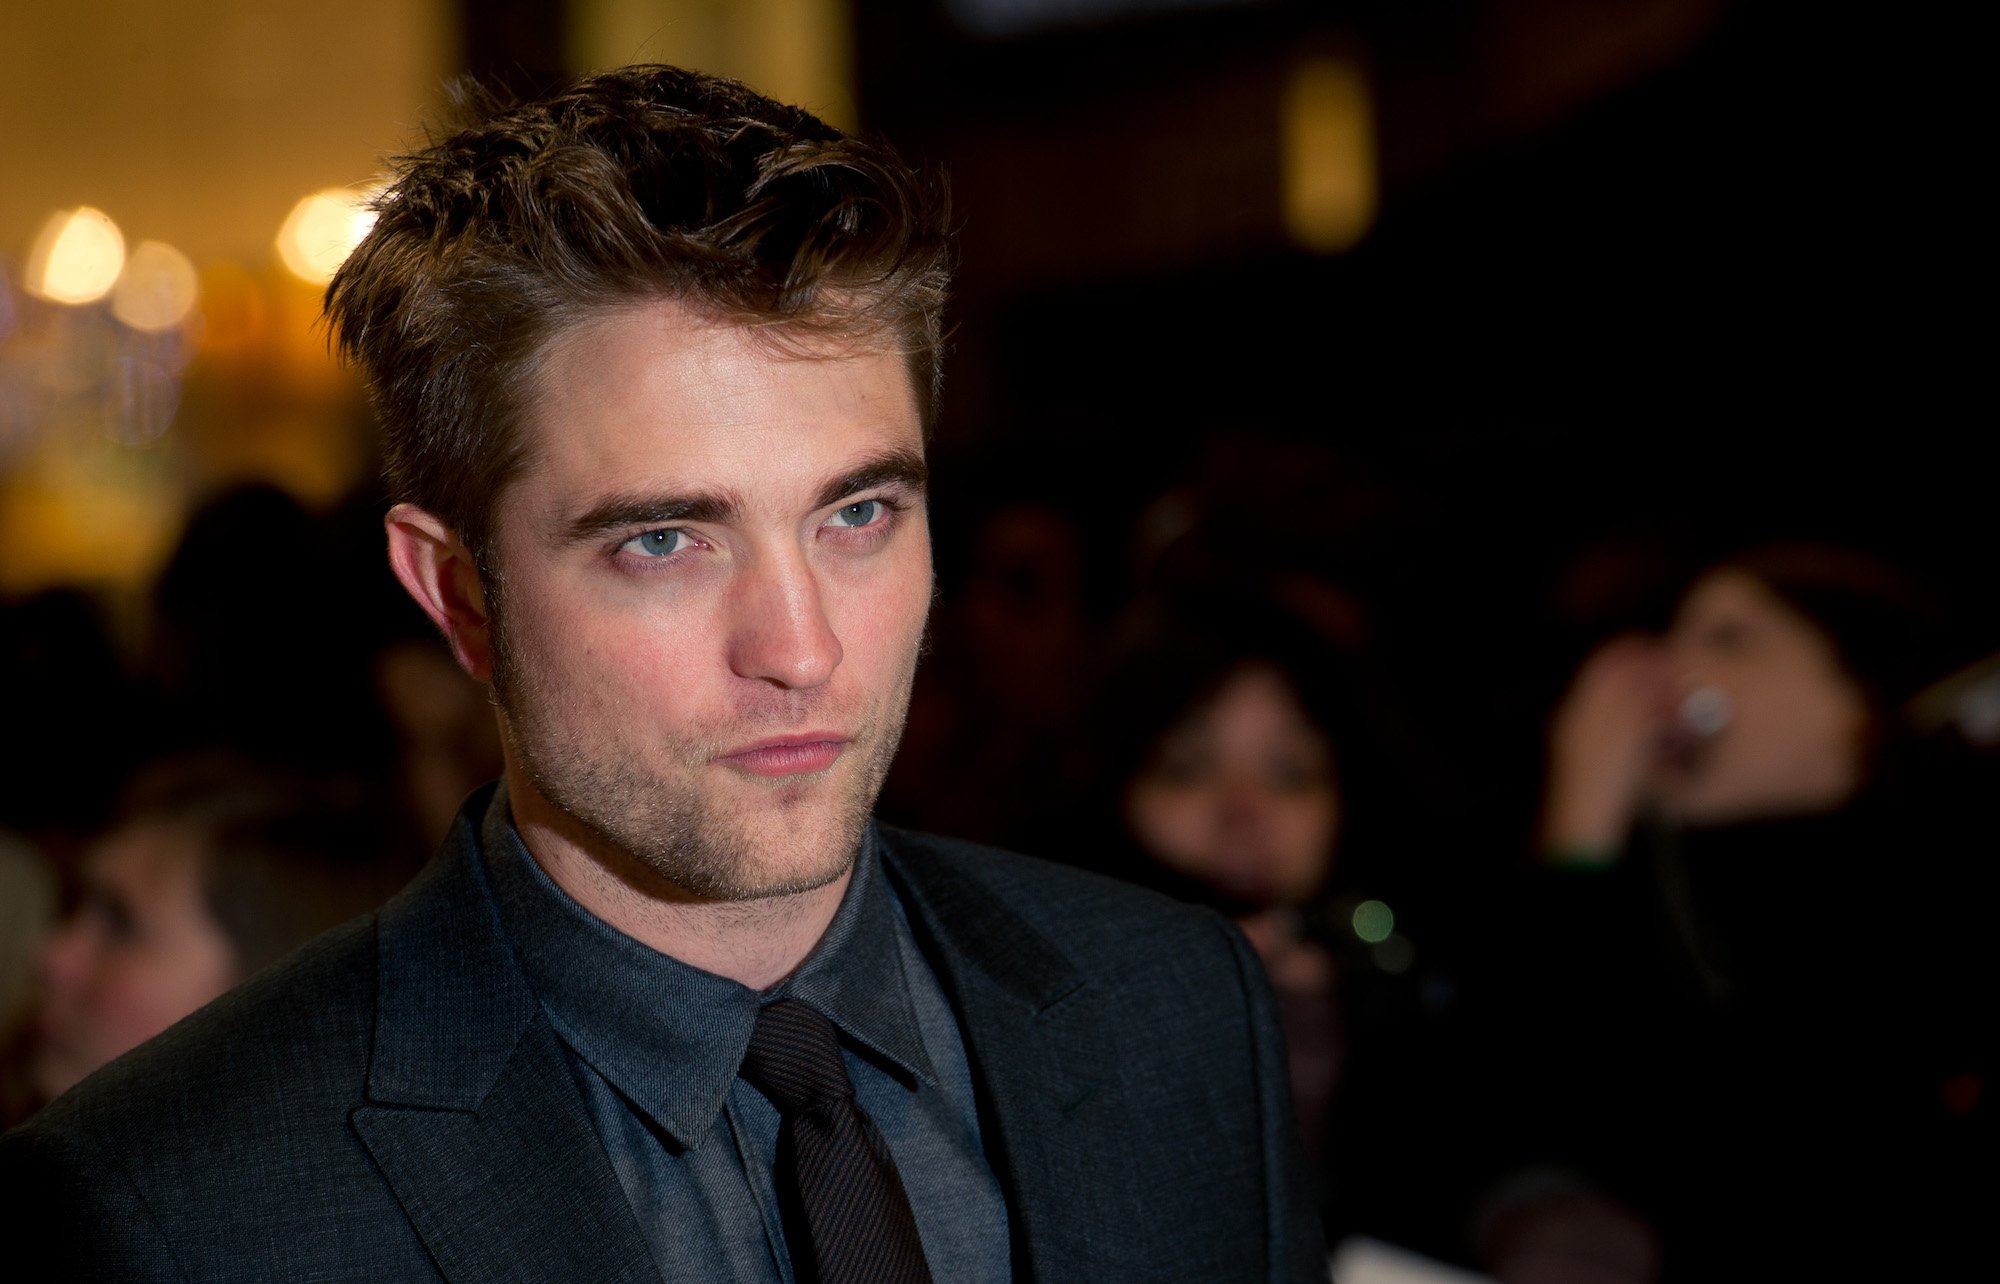 Robert Pattinson at the UK premiere of 'The Twilight Saga: Breaking Dawn Part 1' on Nov. 16, 2011